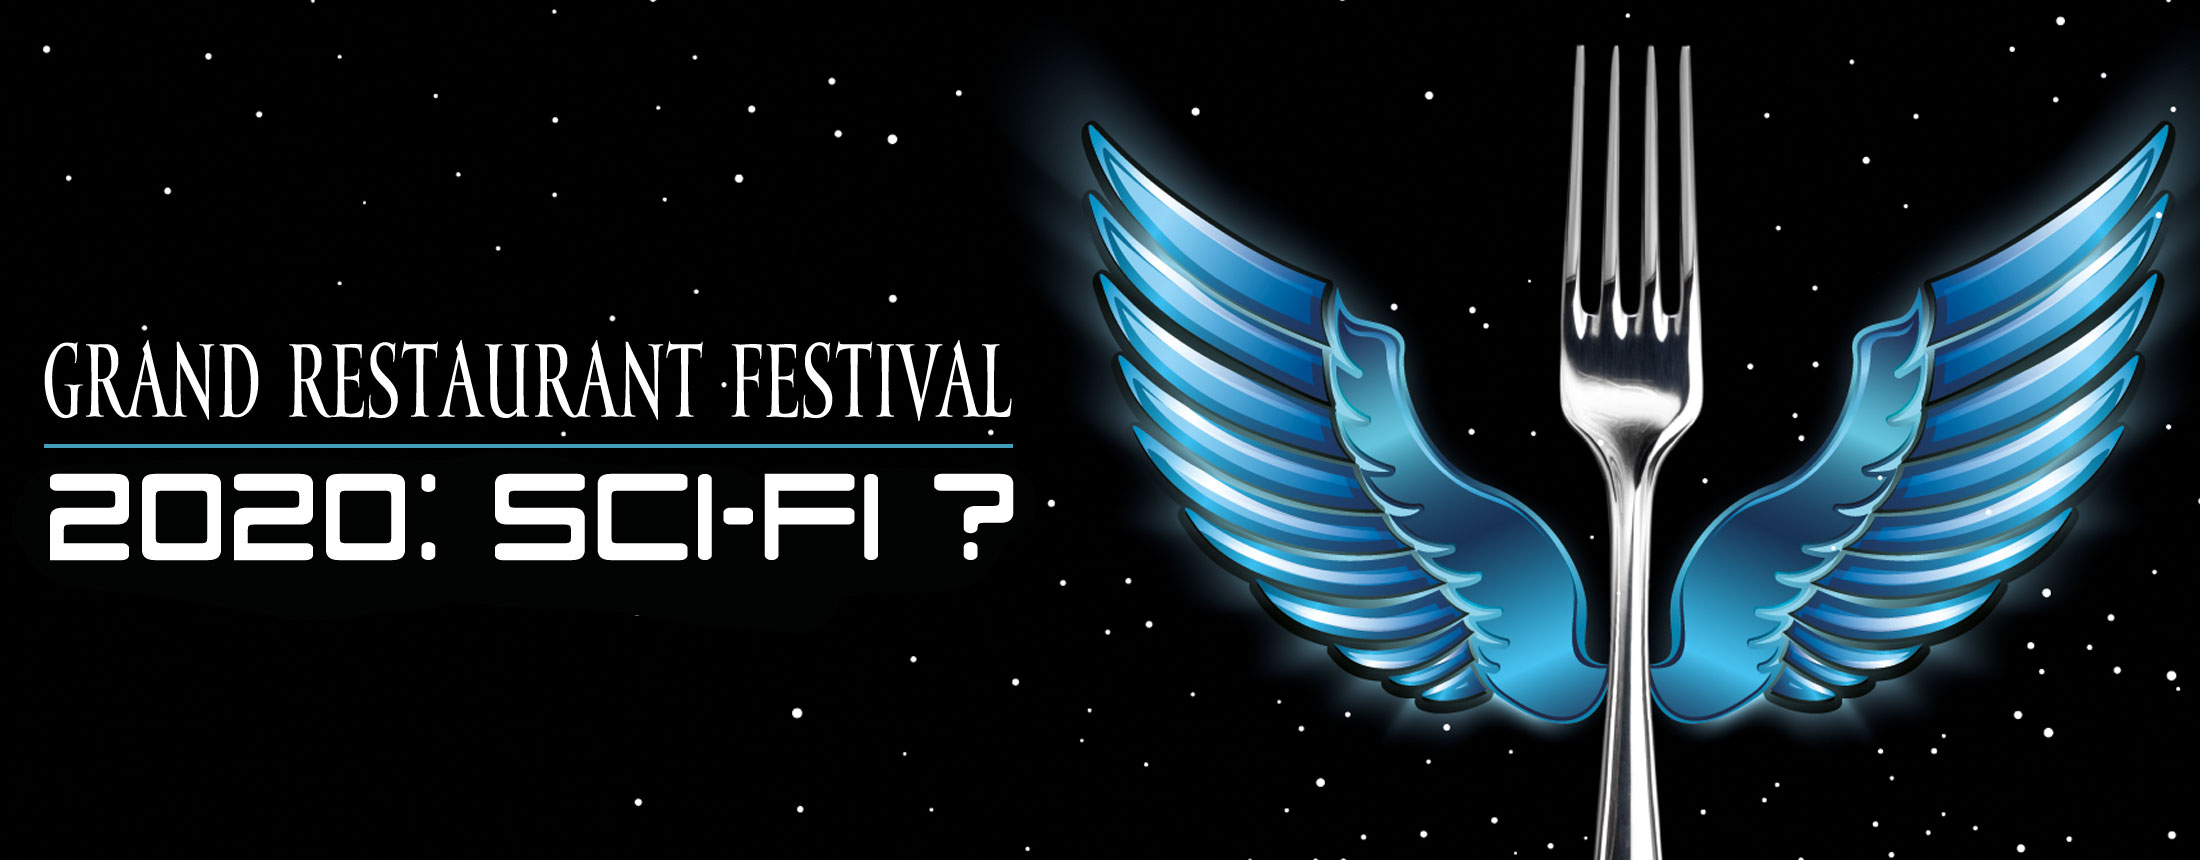 Grand Restaurant Festival 2020: Sci-Fi?